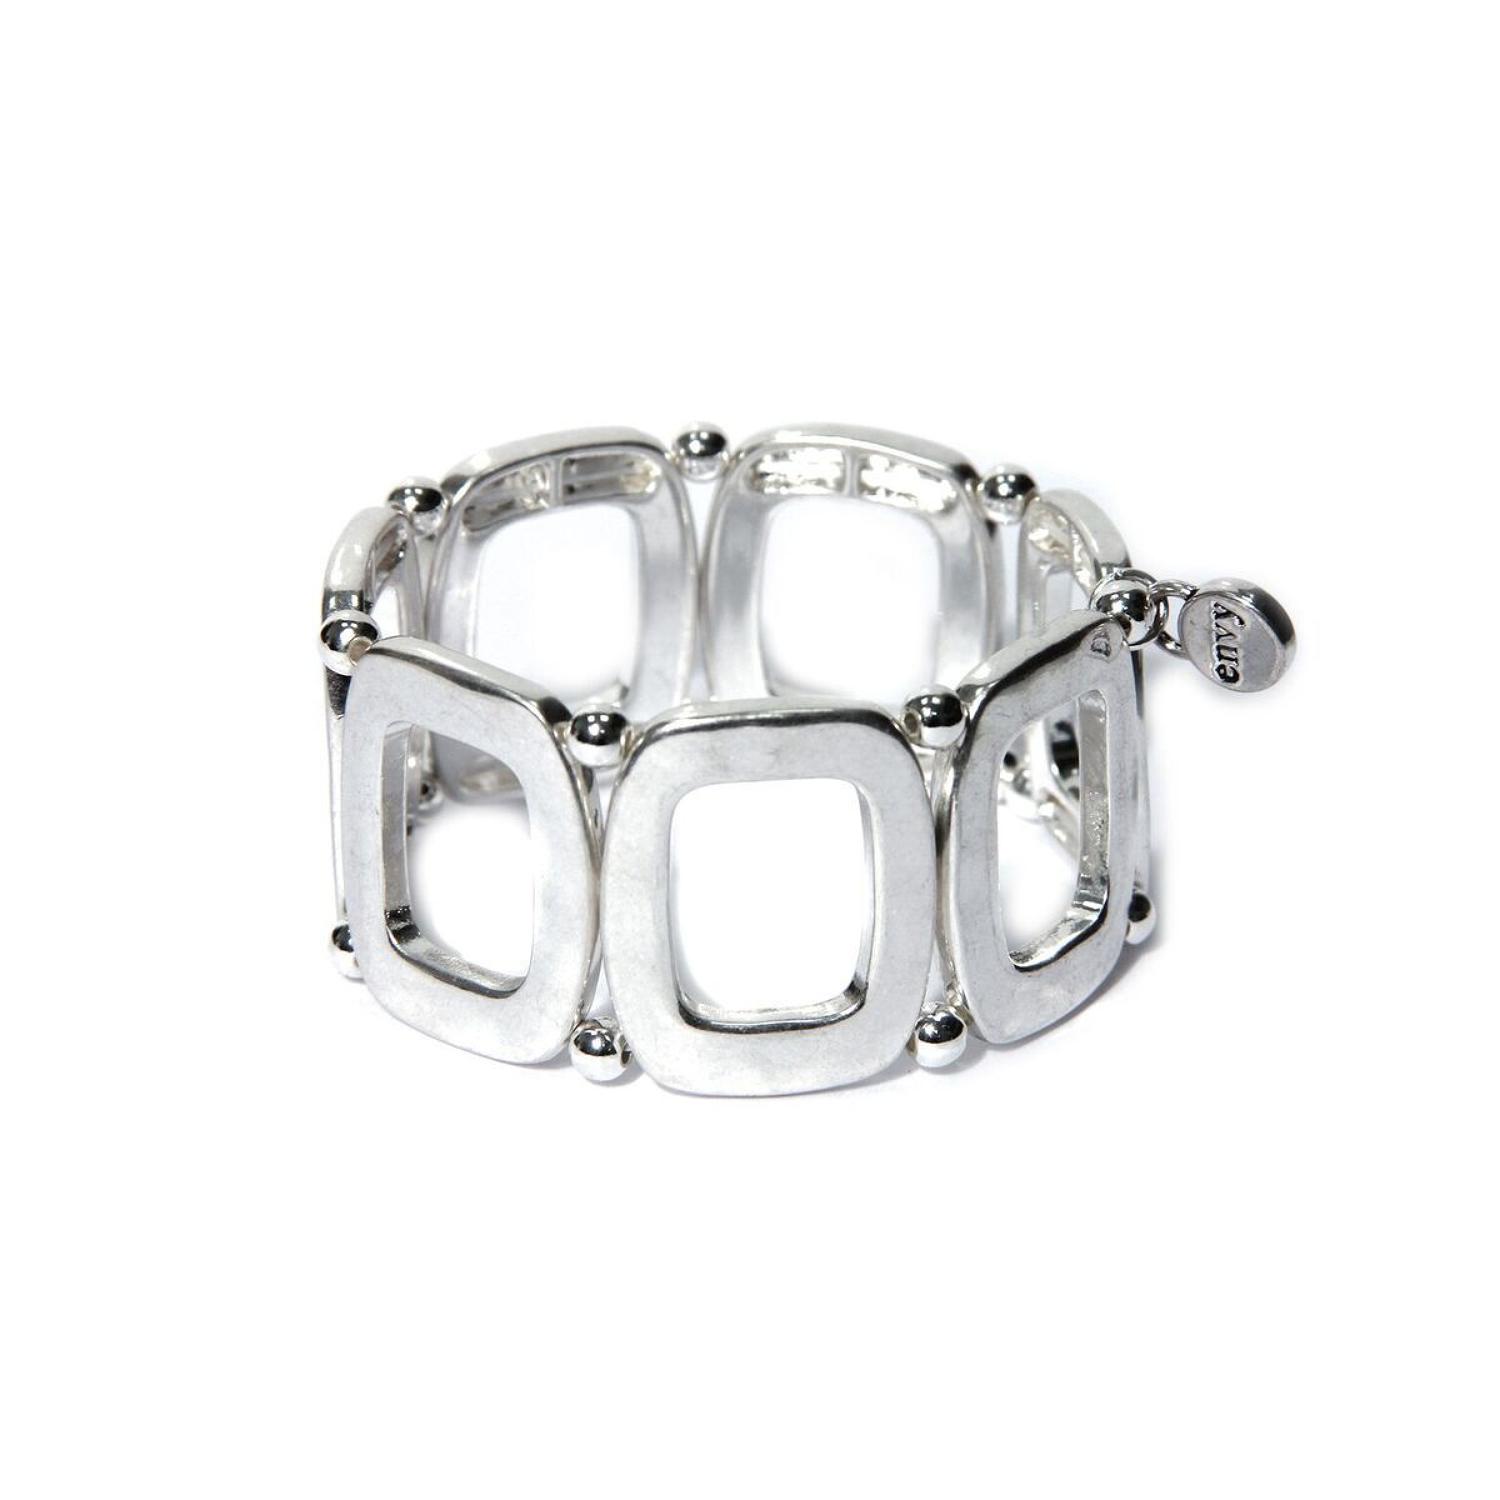 Envy - Silver bracelet - Ref 156SLBF